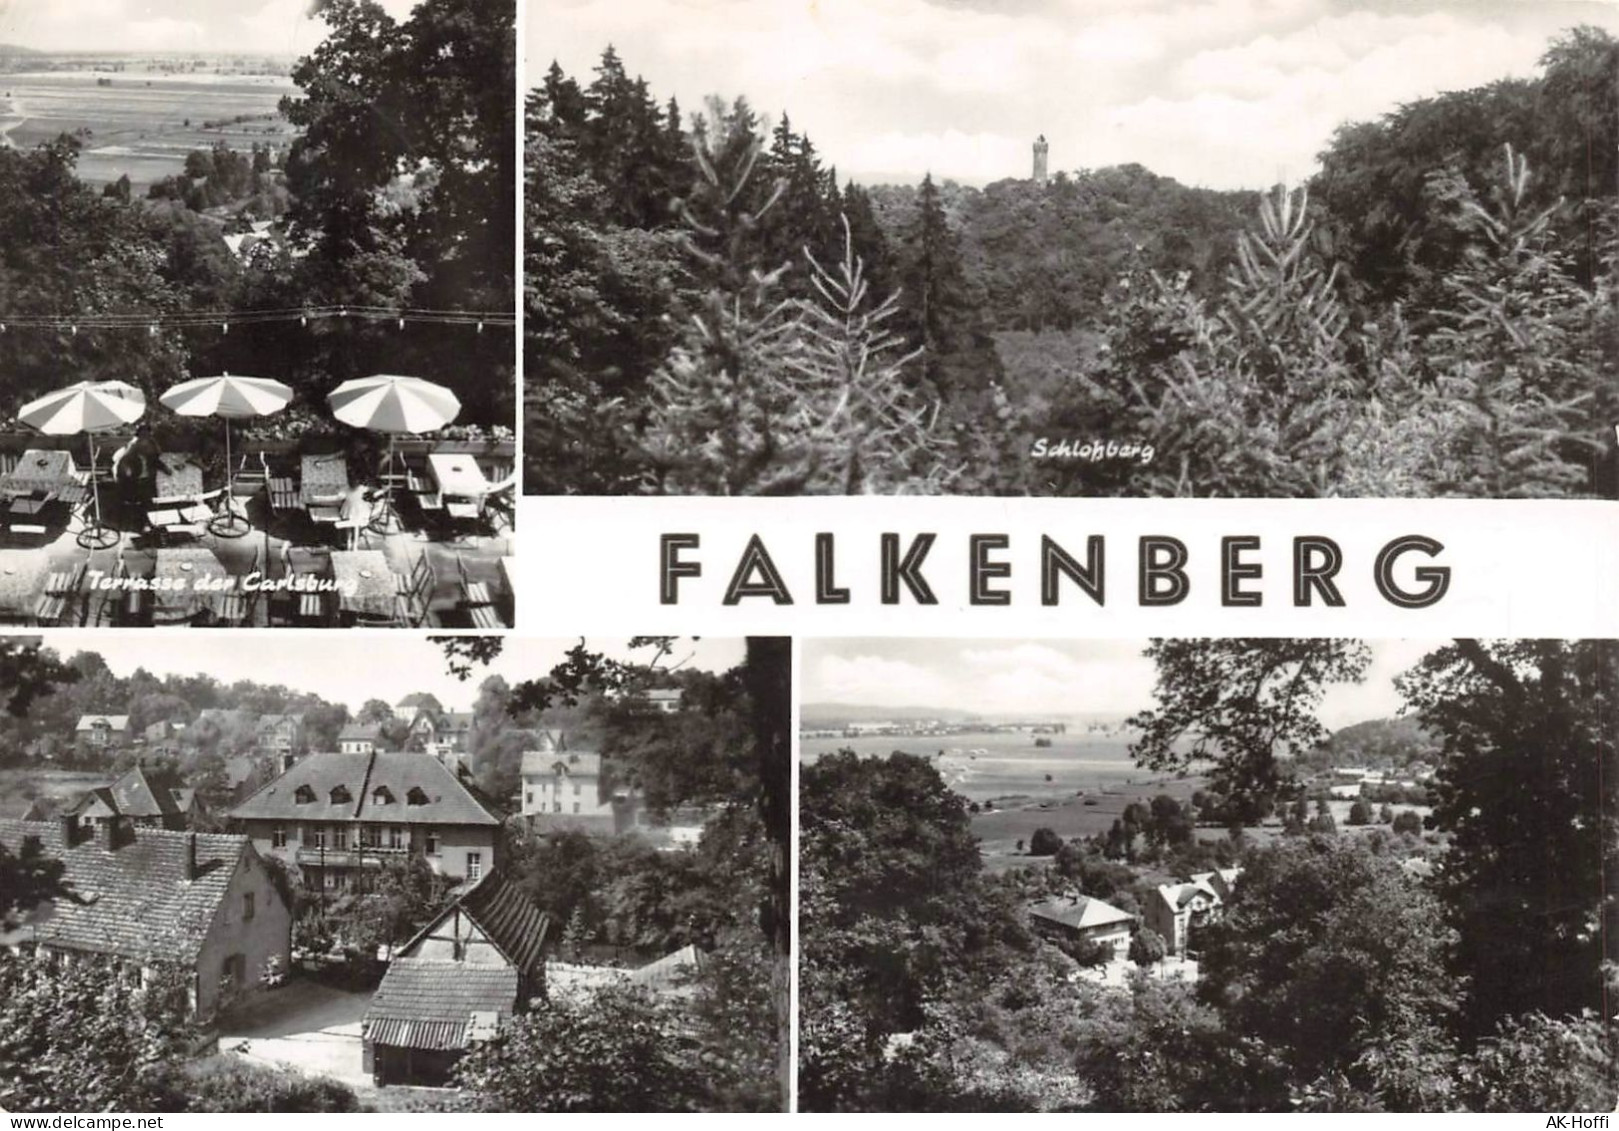 Falkenberg In Der Mark - Mehrbildkarte (875) - Falkenberg (Mark)